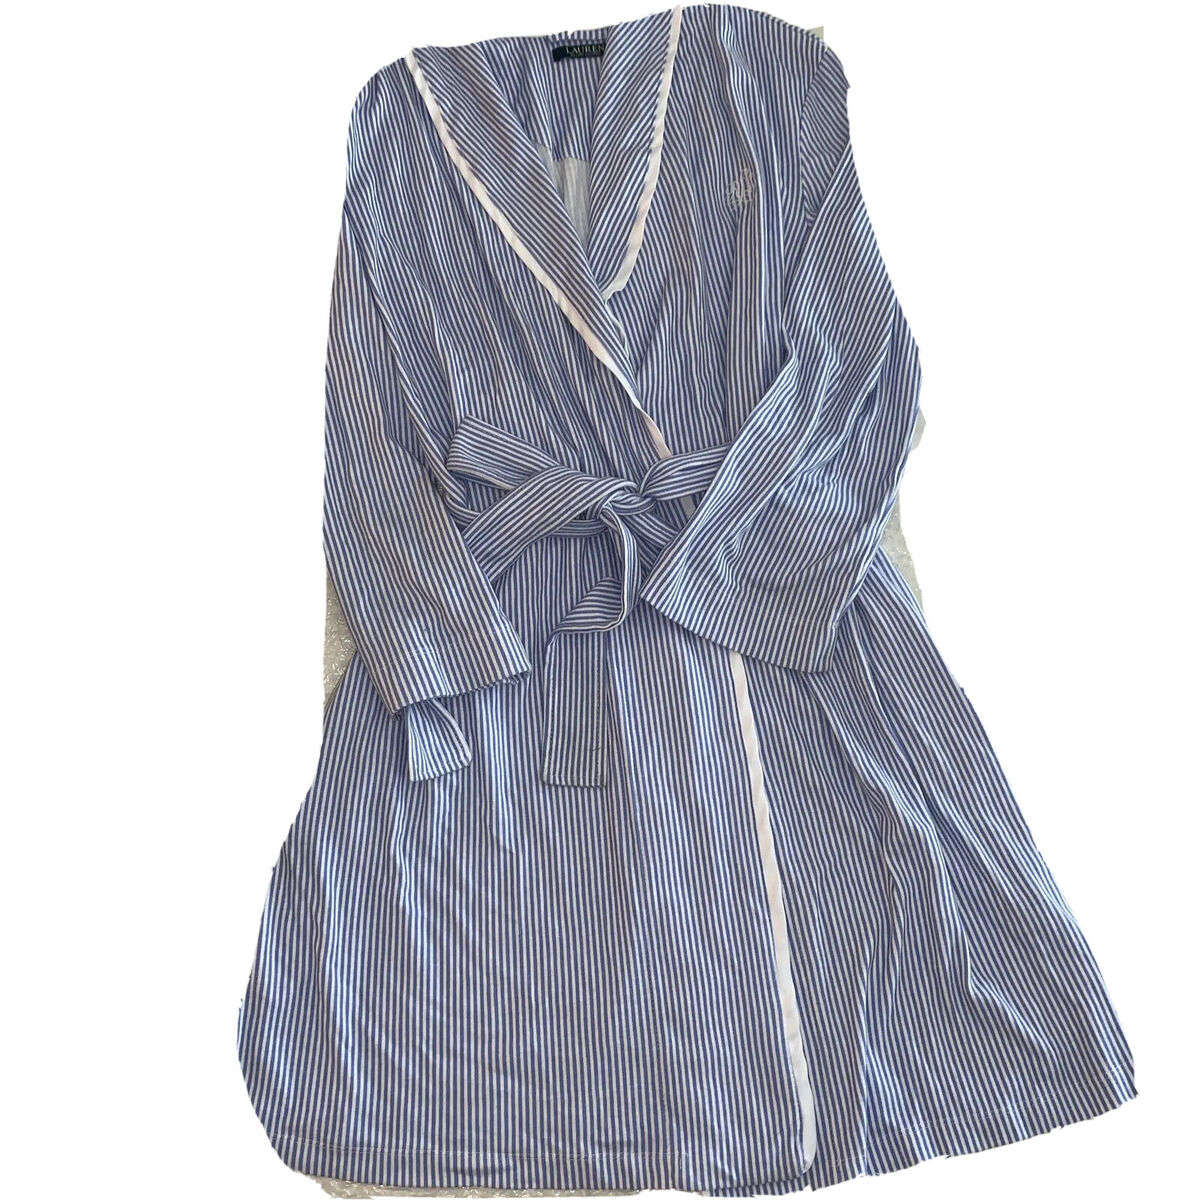 Polo Ralph Lauren LONG SLEEVE DAY DRESS  Vestido camisero  bluewhite  multiazul  Zalandoes